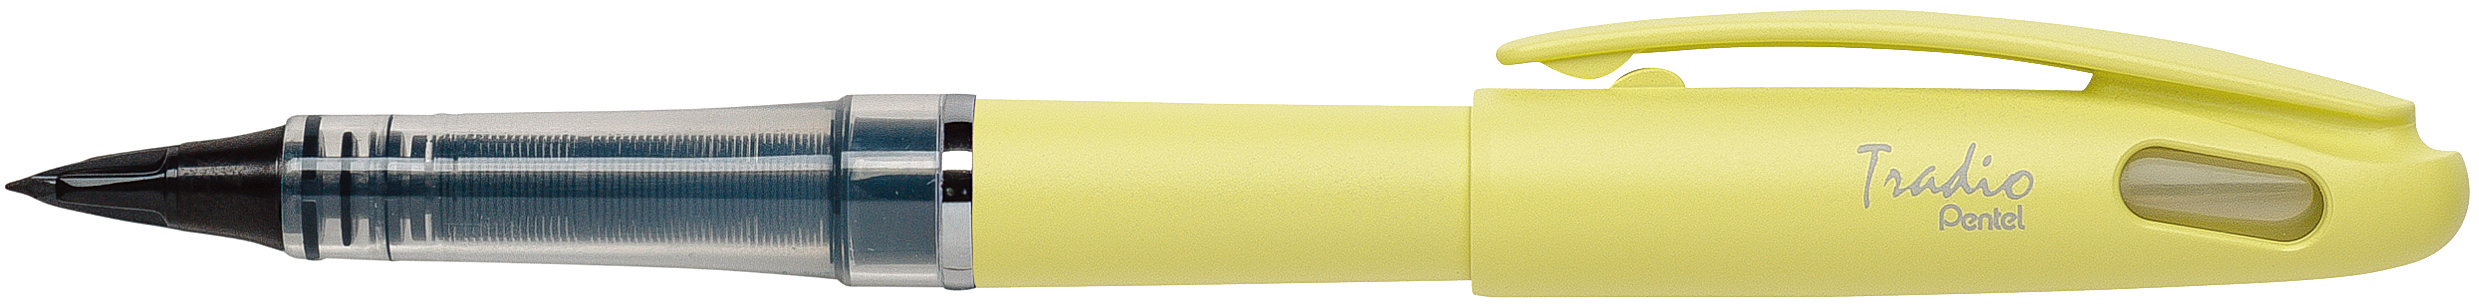 Pentel Tradio Pastel - Feutre plume - corps jaune